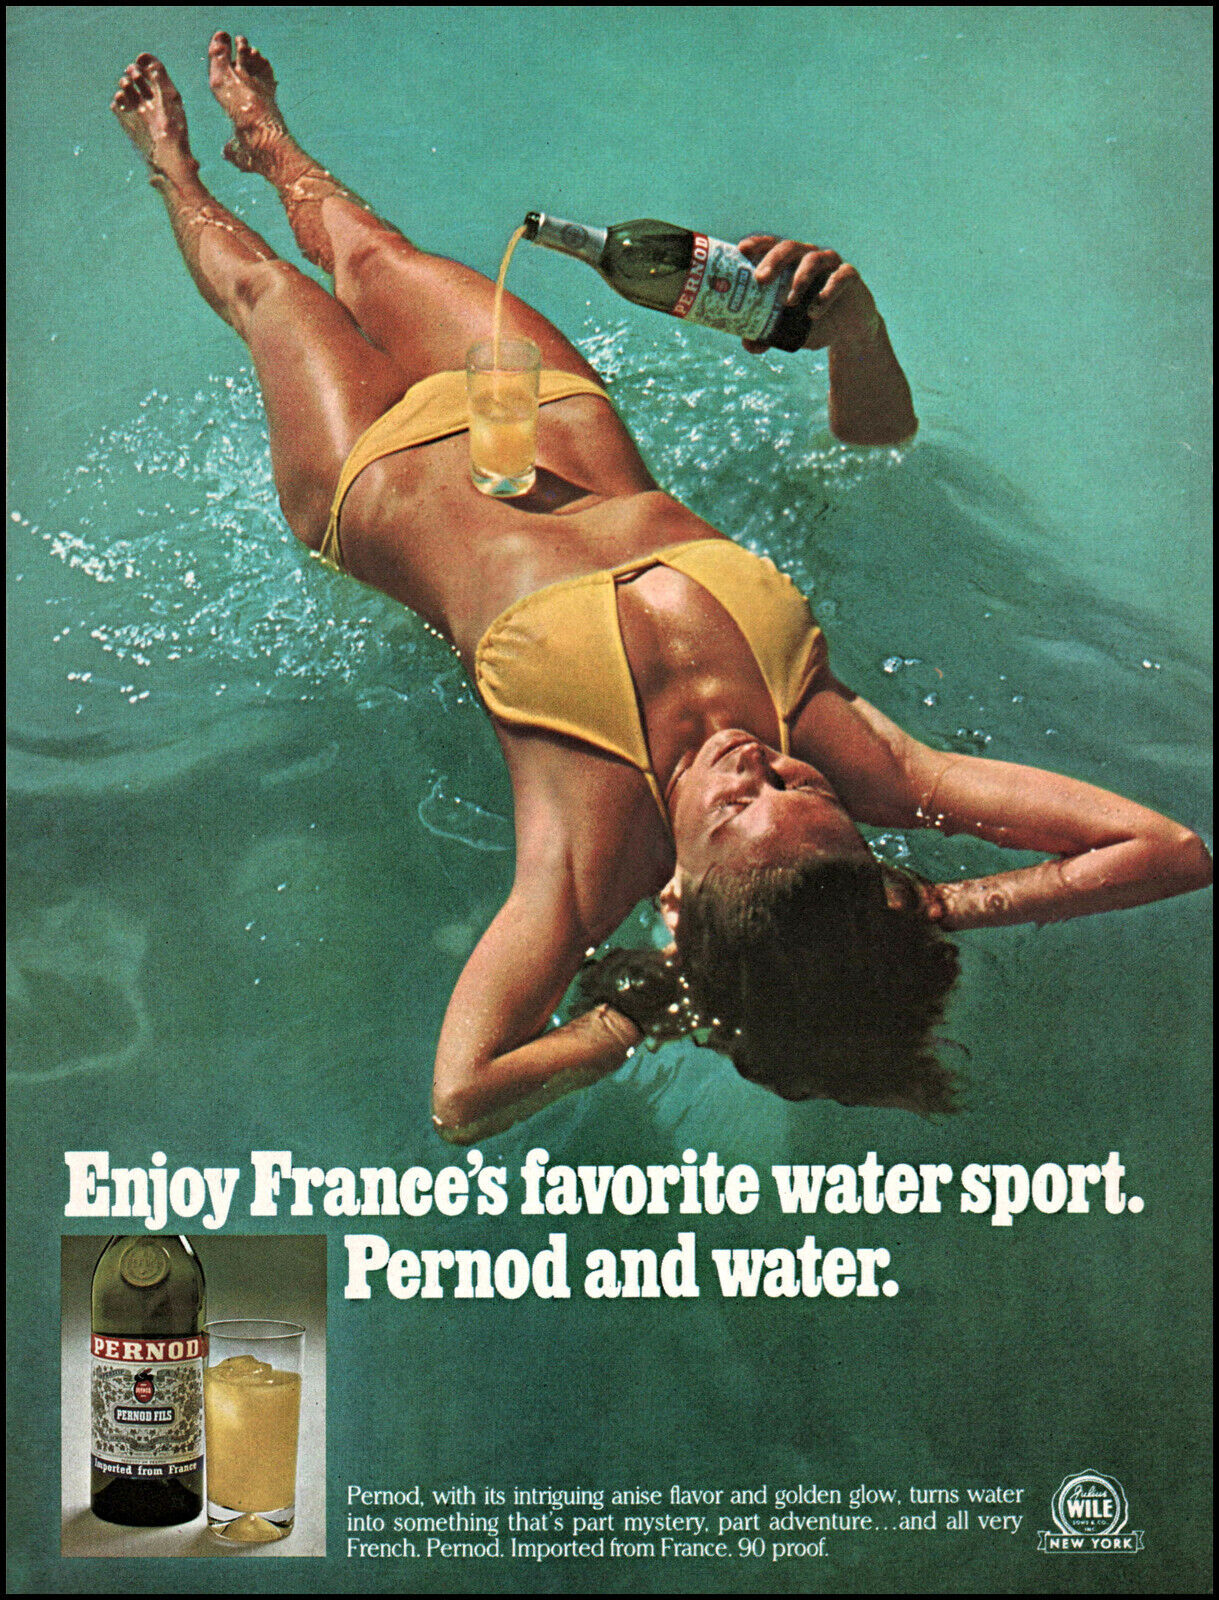 1976 Woman Bikini Pool Pernod Fils absinthe water sport retro photo print ad S9